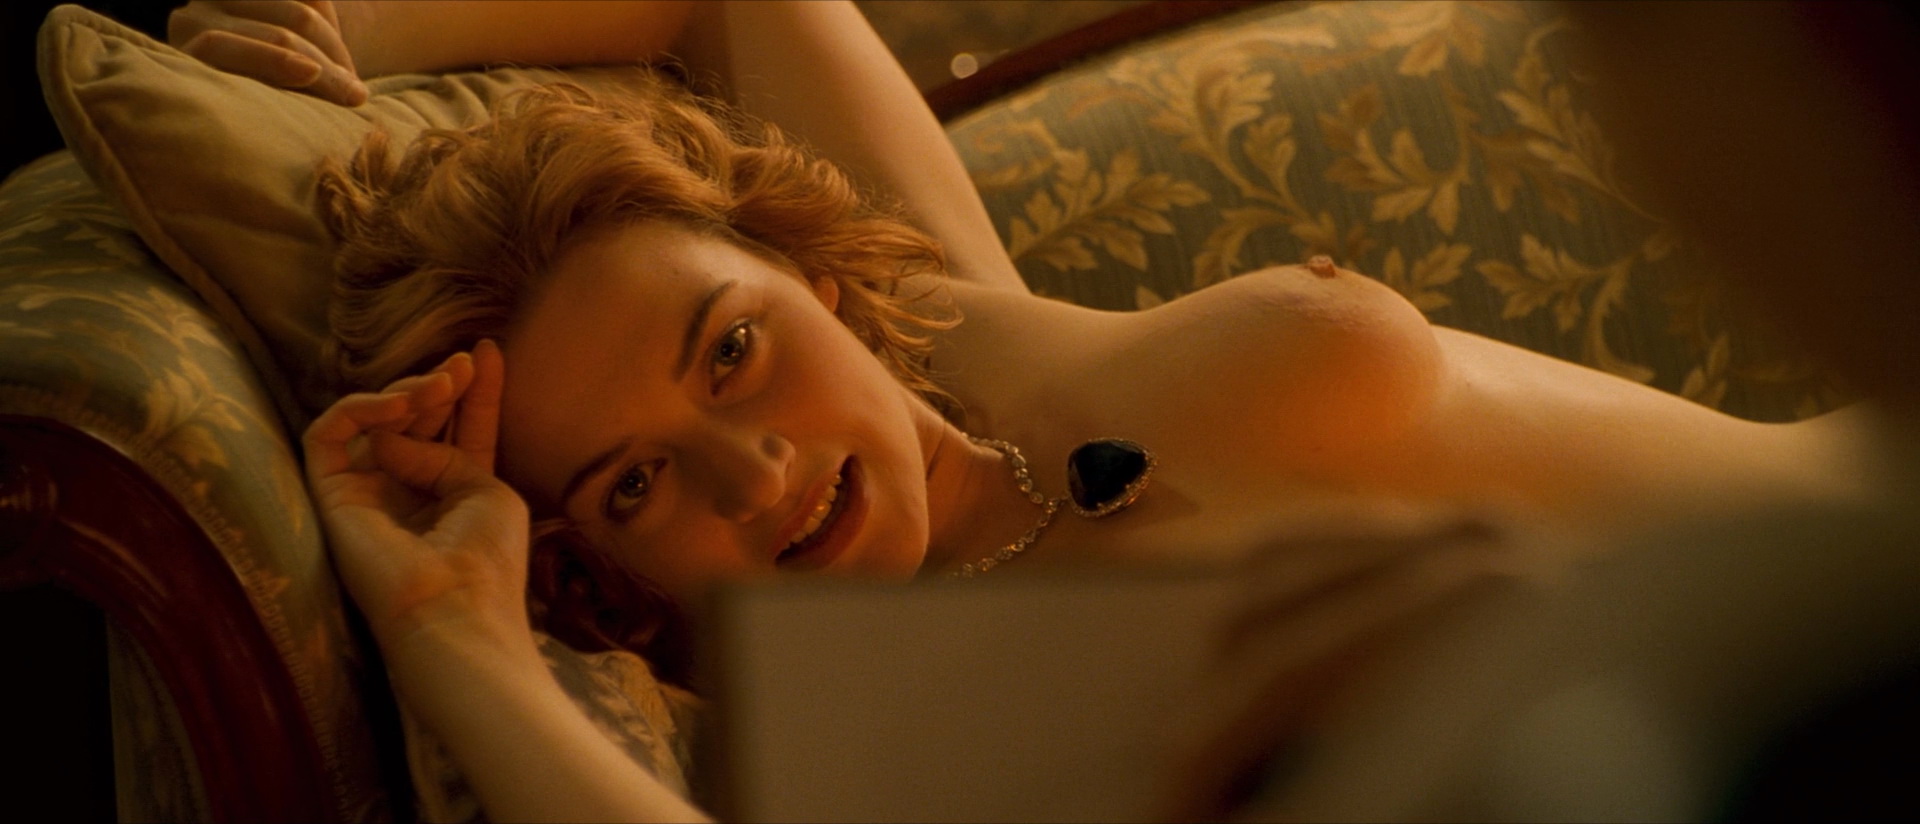 Taitanic Movie Sex Vedio - Watch Online - Kate Winslet â€“ Titanic (1997) HD 1080p